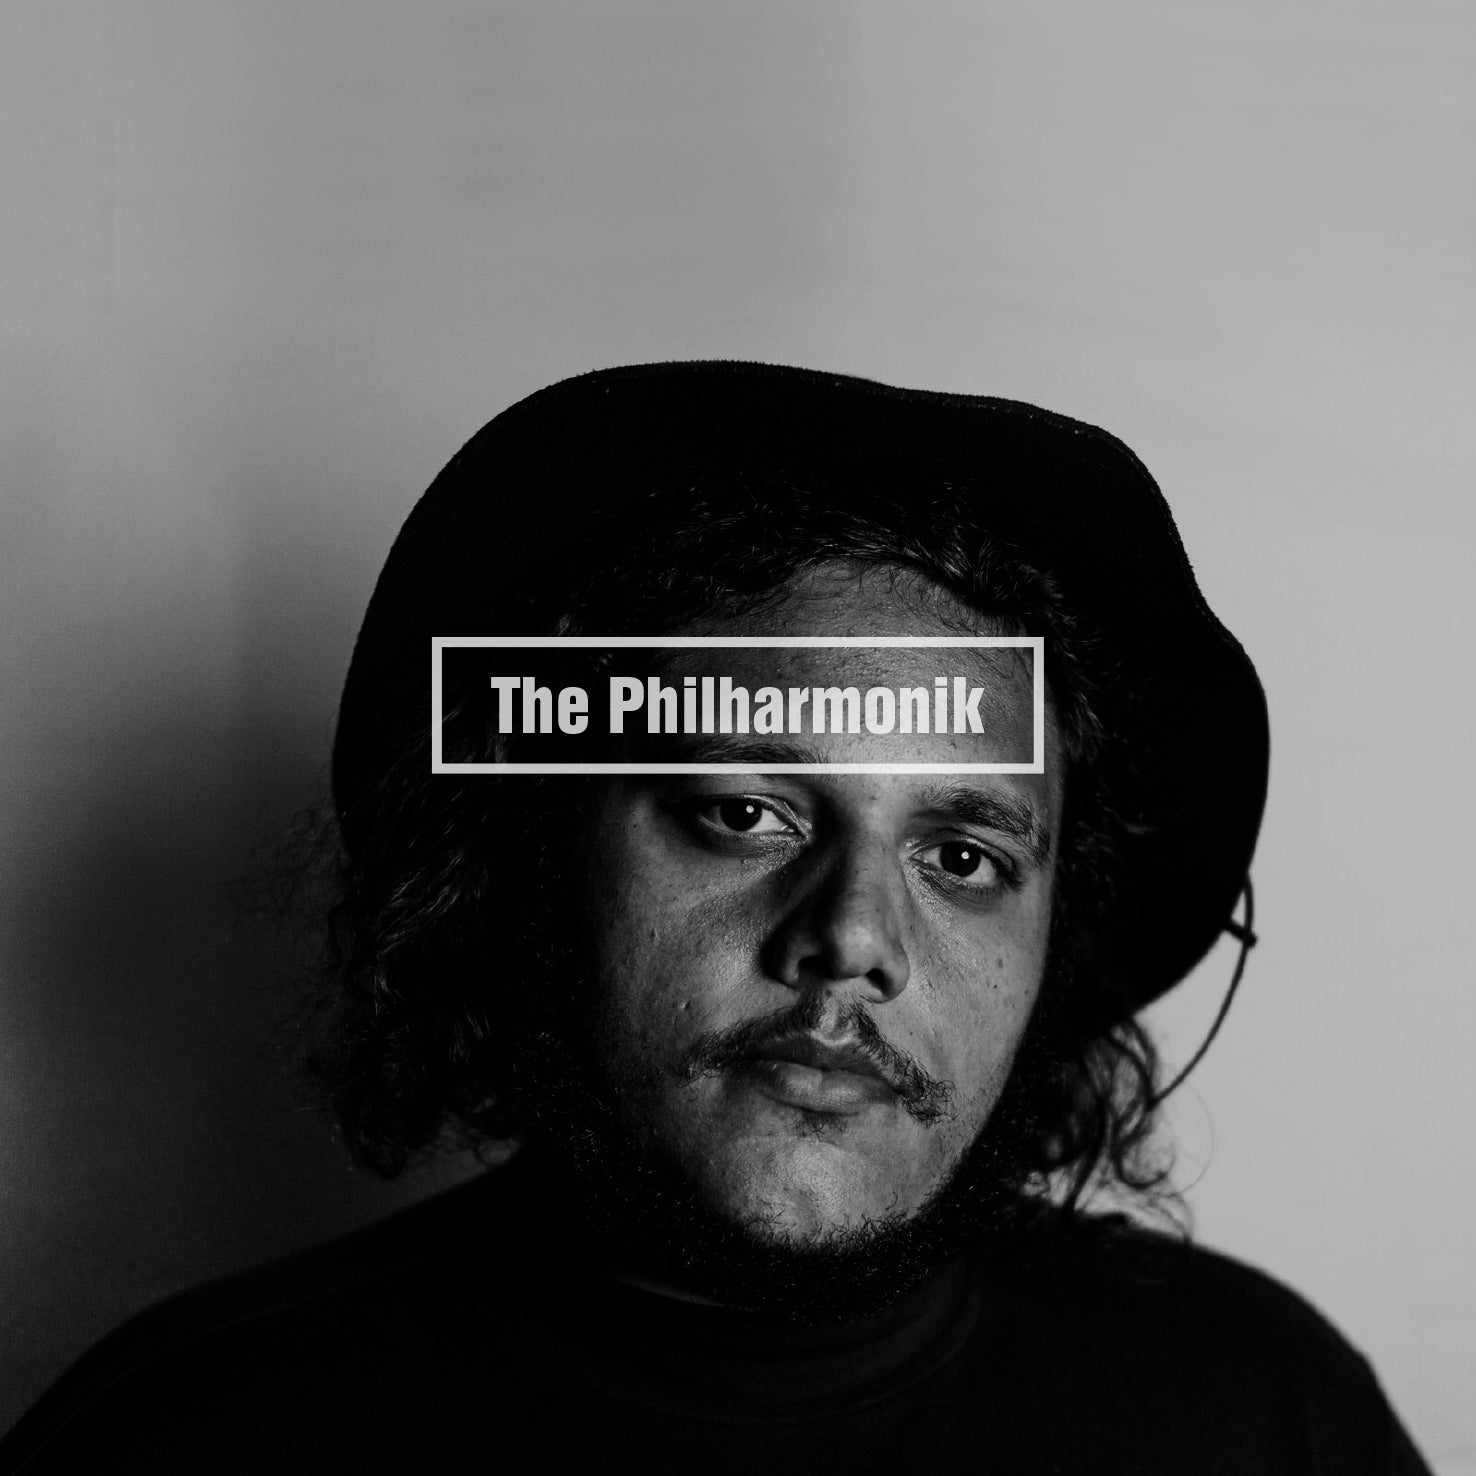 The Philharmonik / The Philharmonik